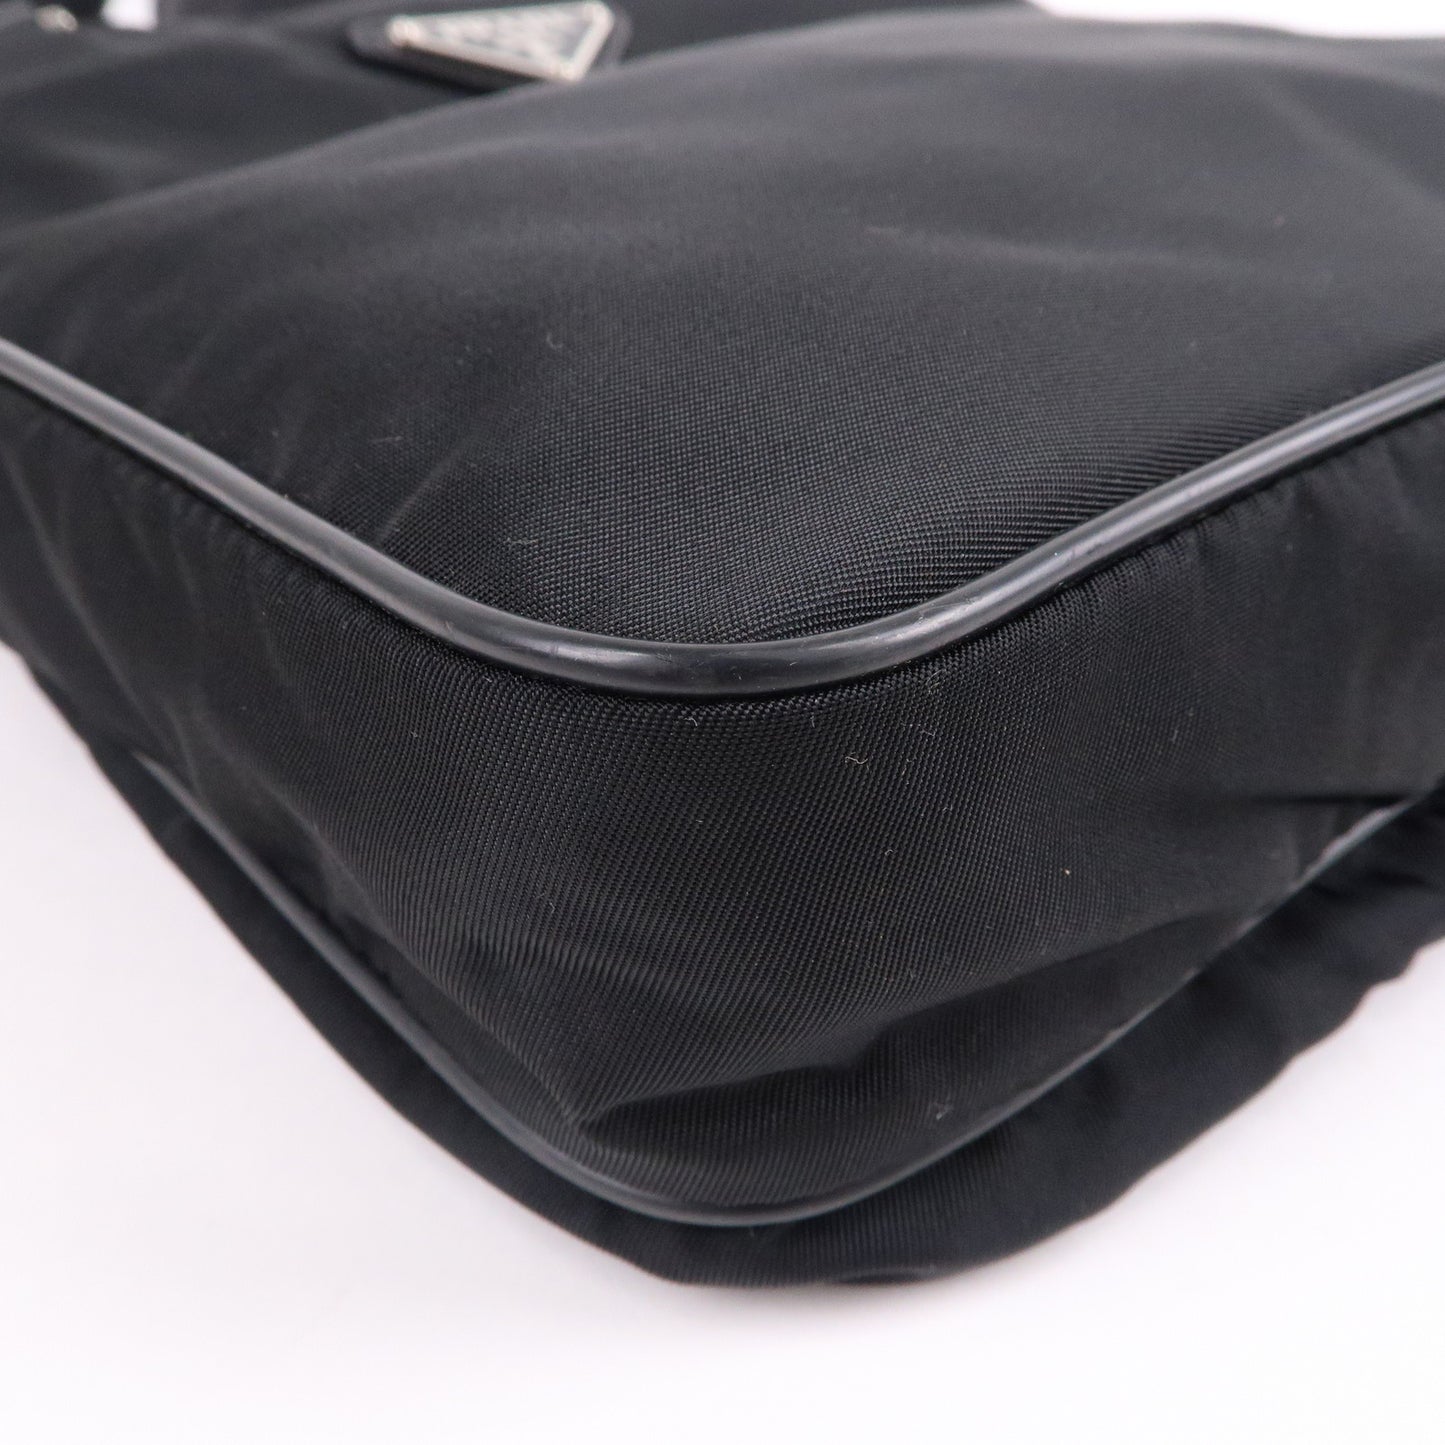 PRADA Logo Nylon Leather Shoulder Bag Crossbody Bag Black VA0270